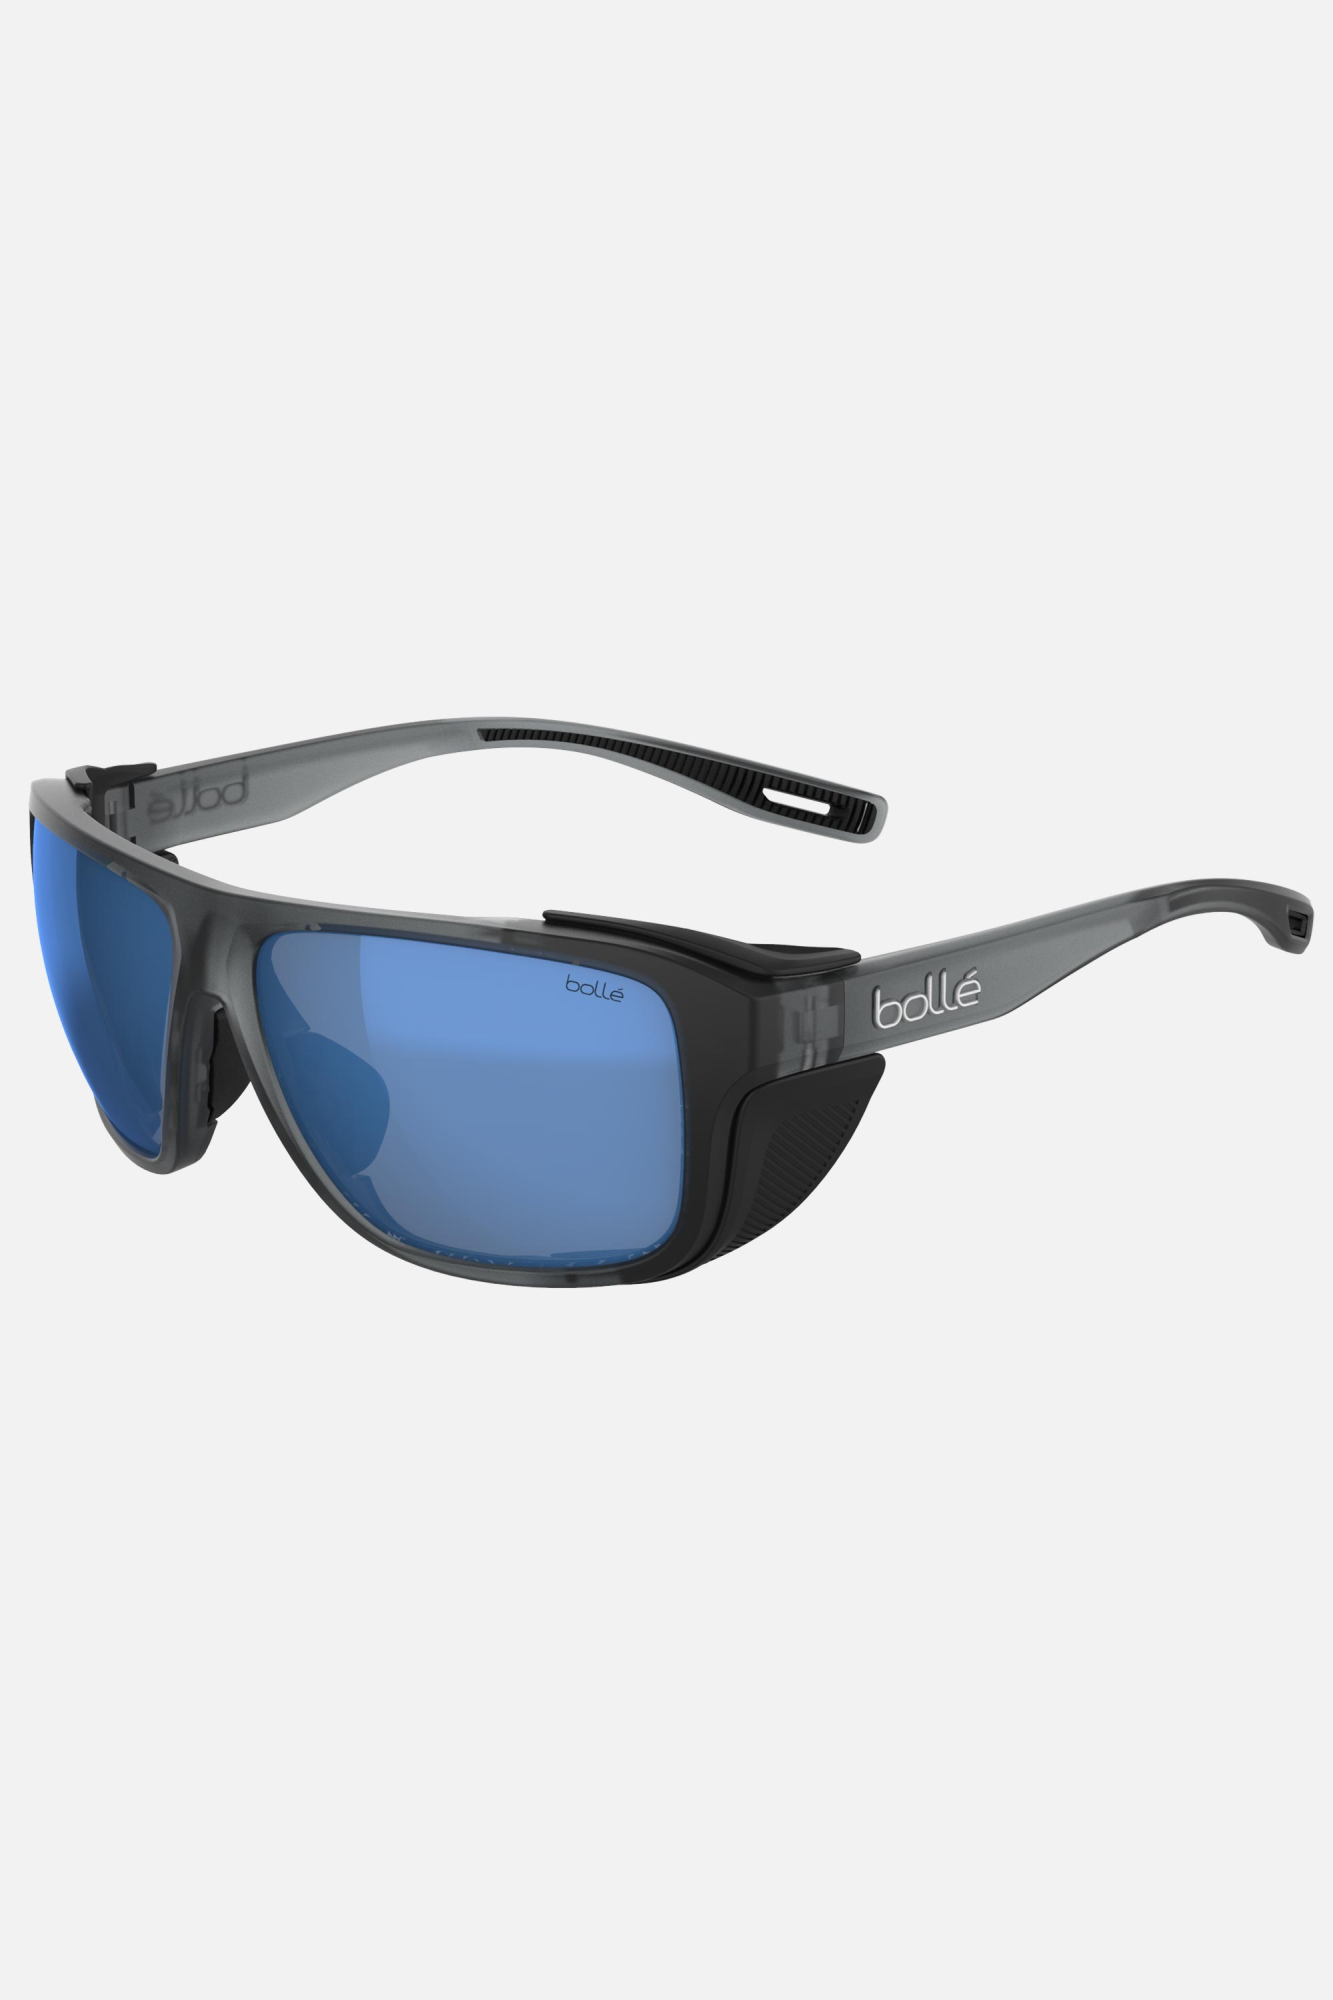 Bolle Pathfinder Sunglasses Grey - Size: ONE